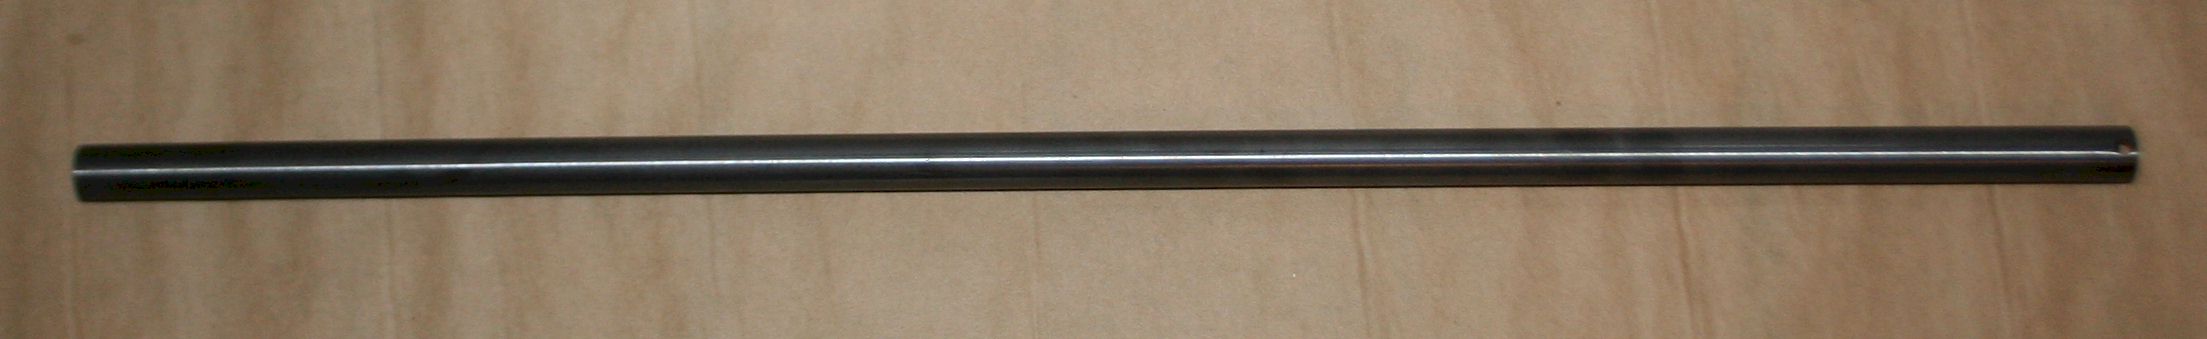 Magazine tube SEAMLESS - Winchester Rifle 23 5/8 pre 64 Large cal 1892, 1894, 1866, 1873, Marlin ORIGINAL